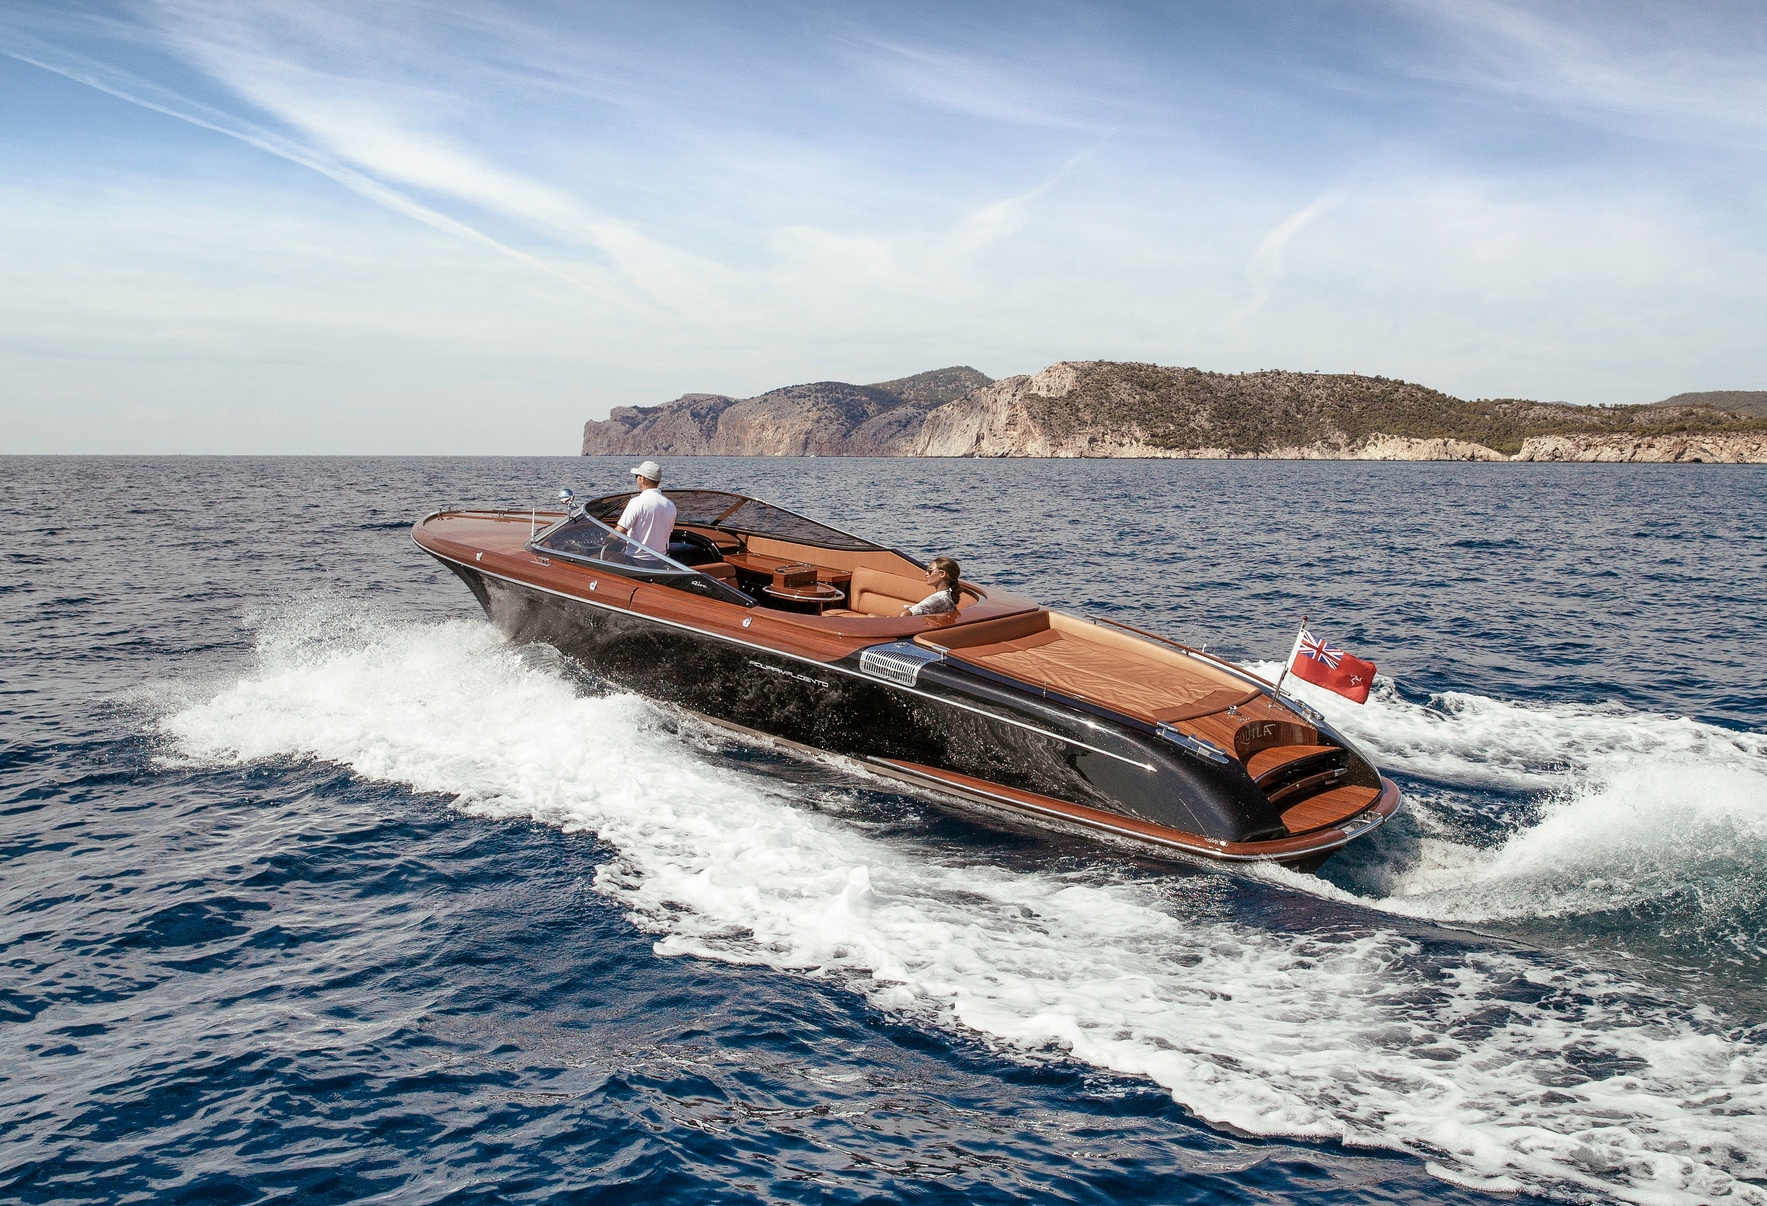 AQUILA Superyacht, Luxury Motor Yacht for Charter